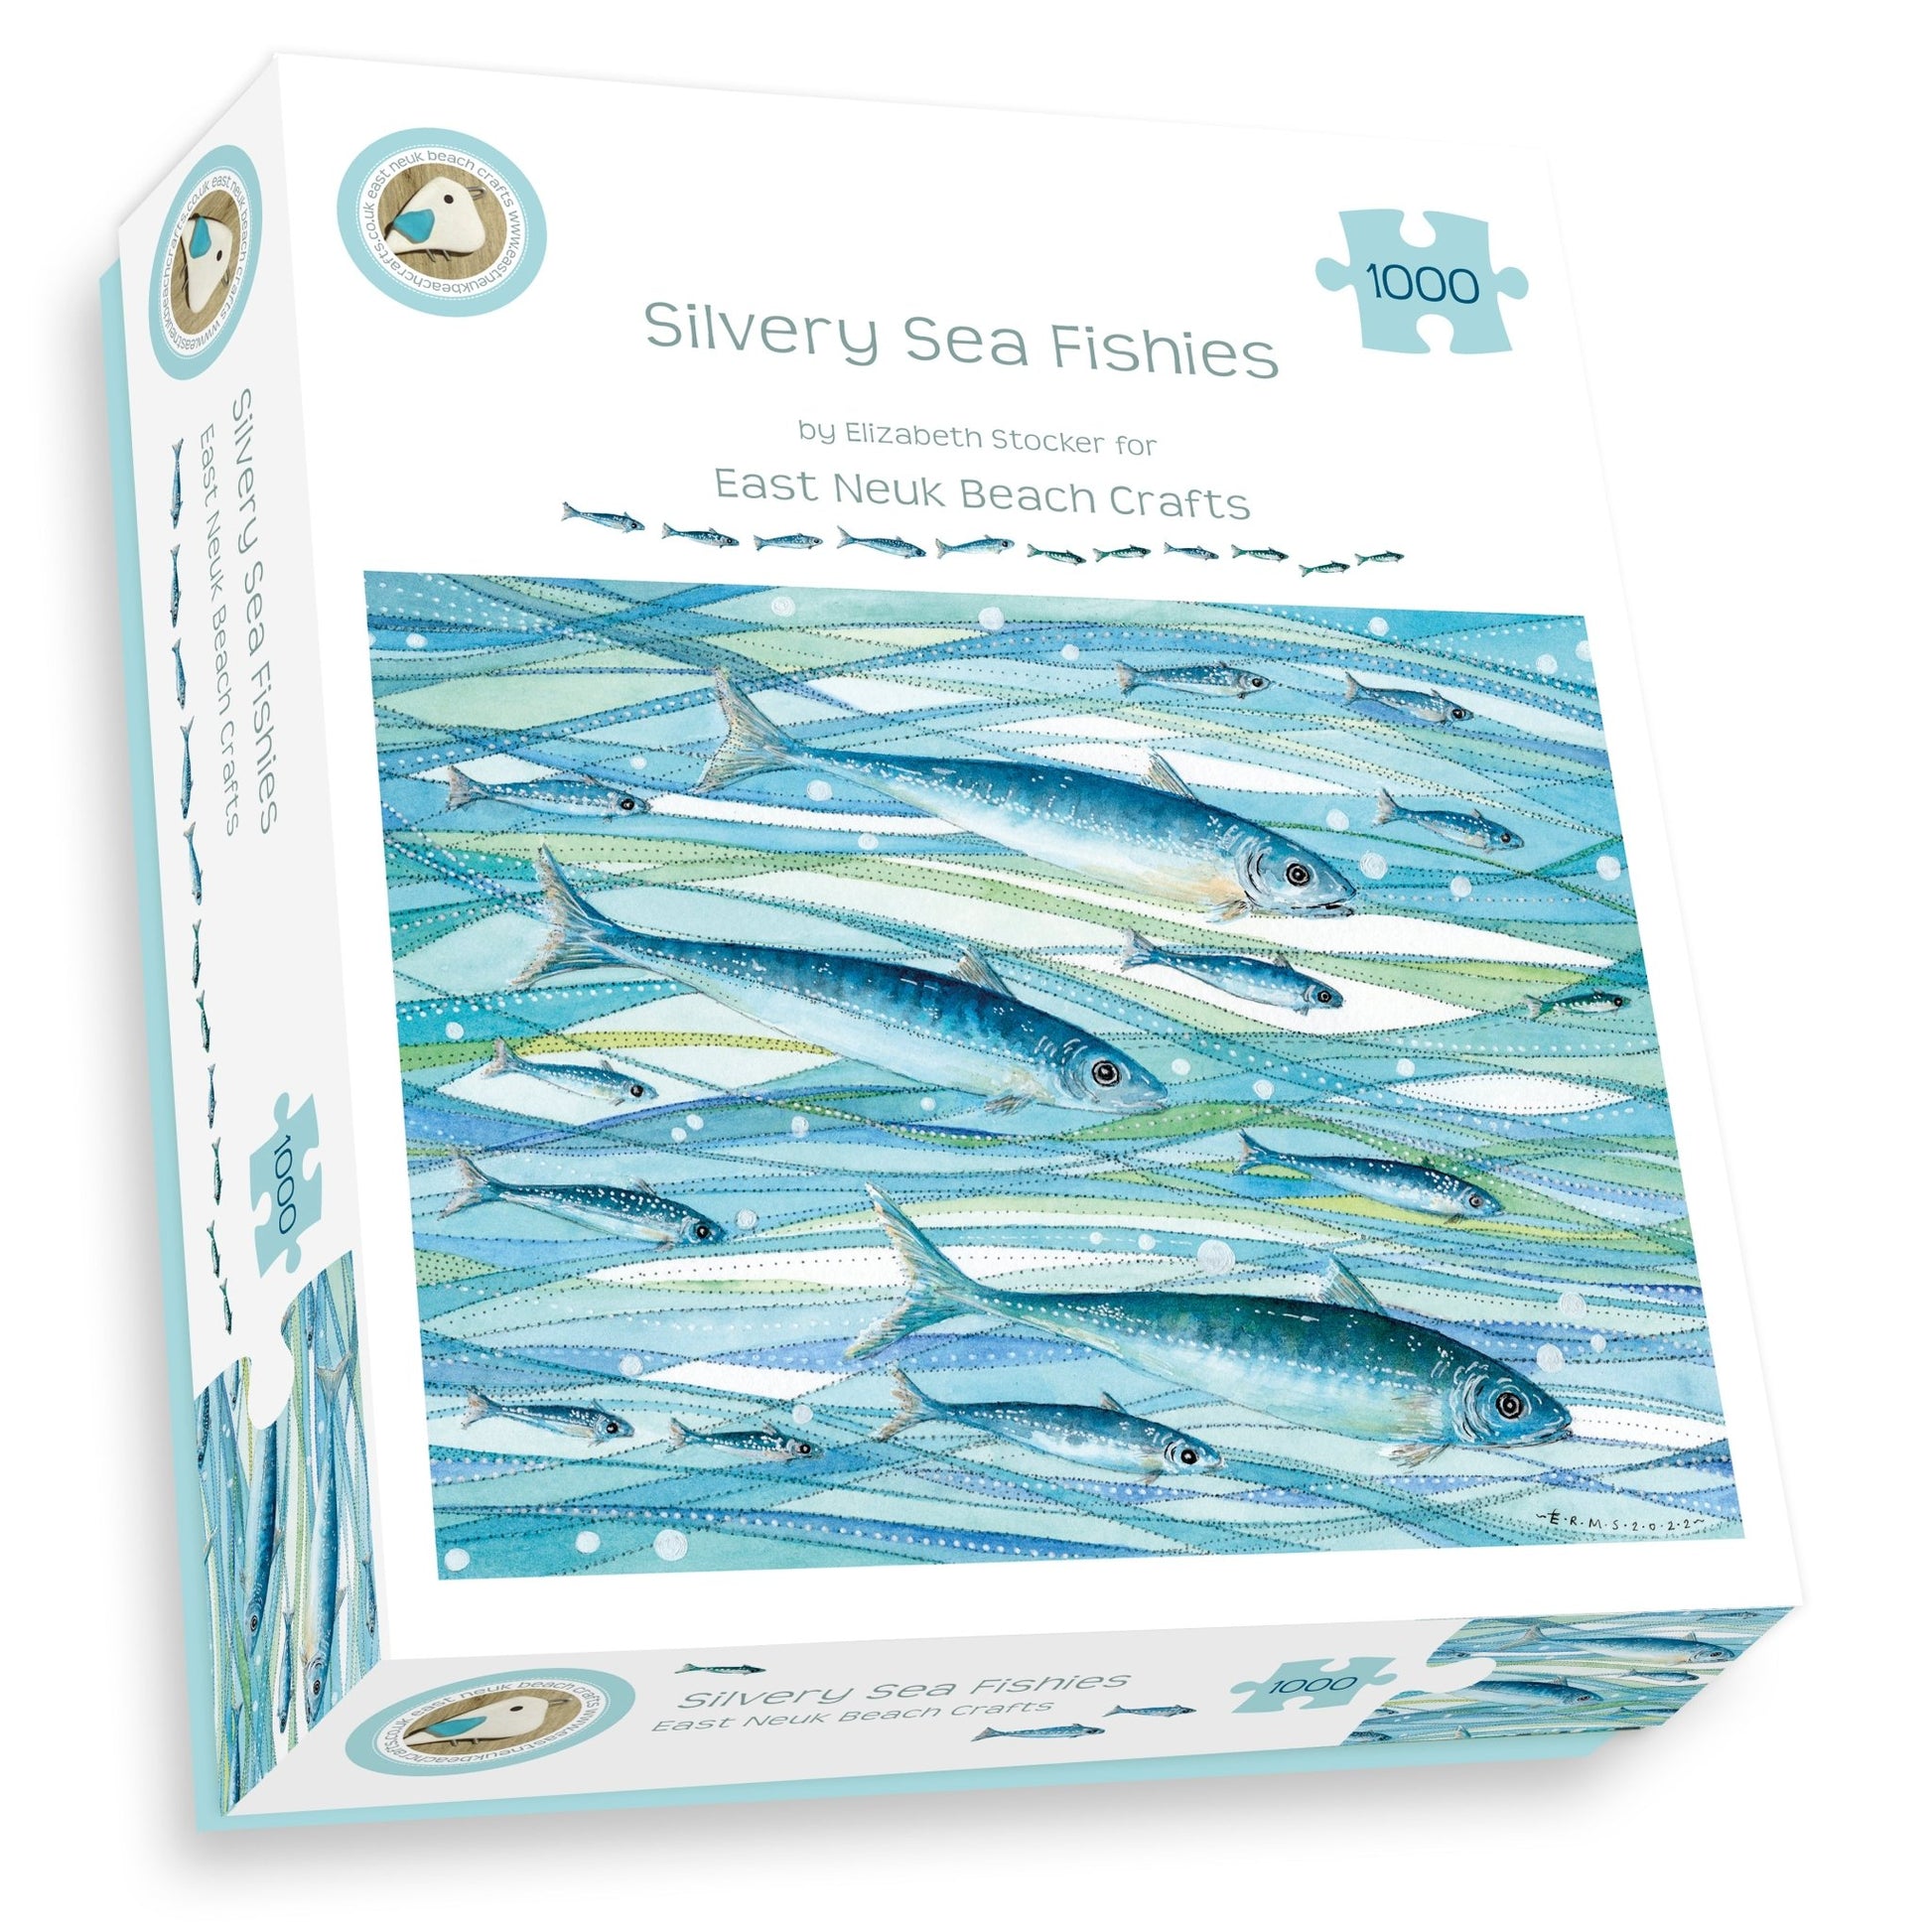 Fish - Seaside Jigsaw Puzzle 1000 pieces - Silvery Seas - Coastal Art by Elizabeth Stocker - East Neuk Beach Crafts